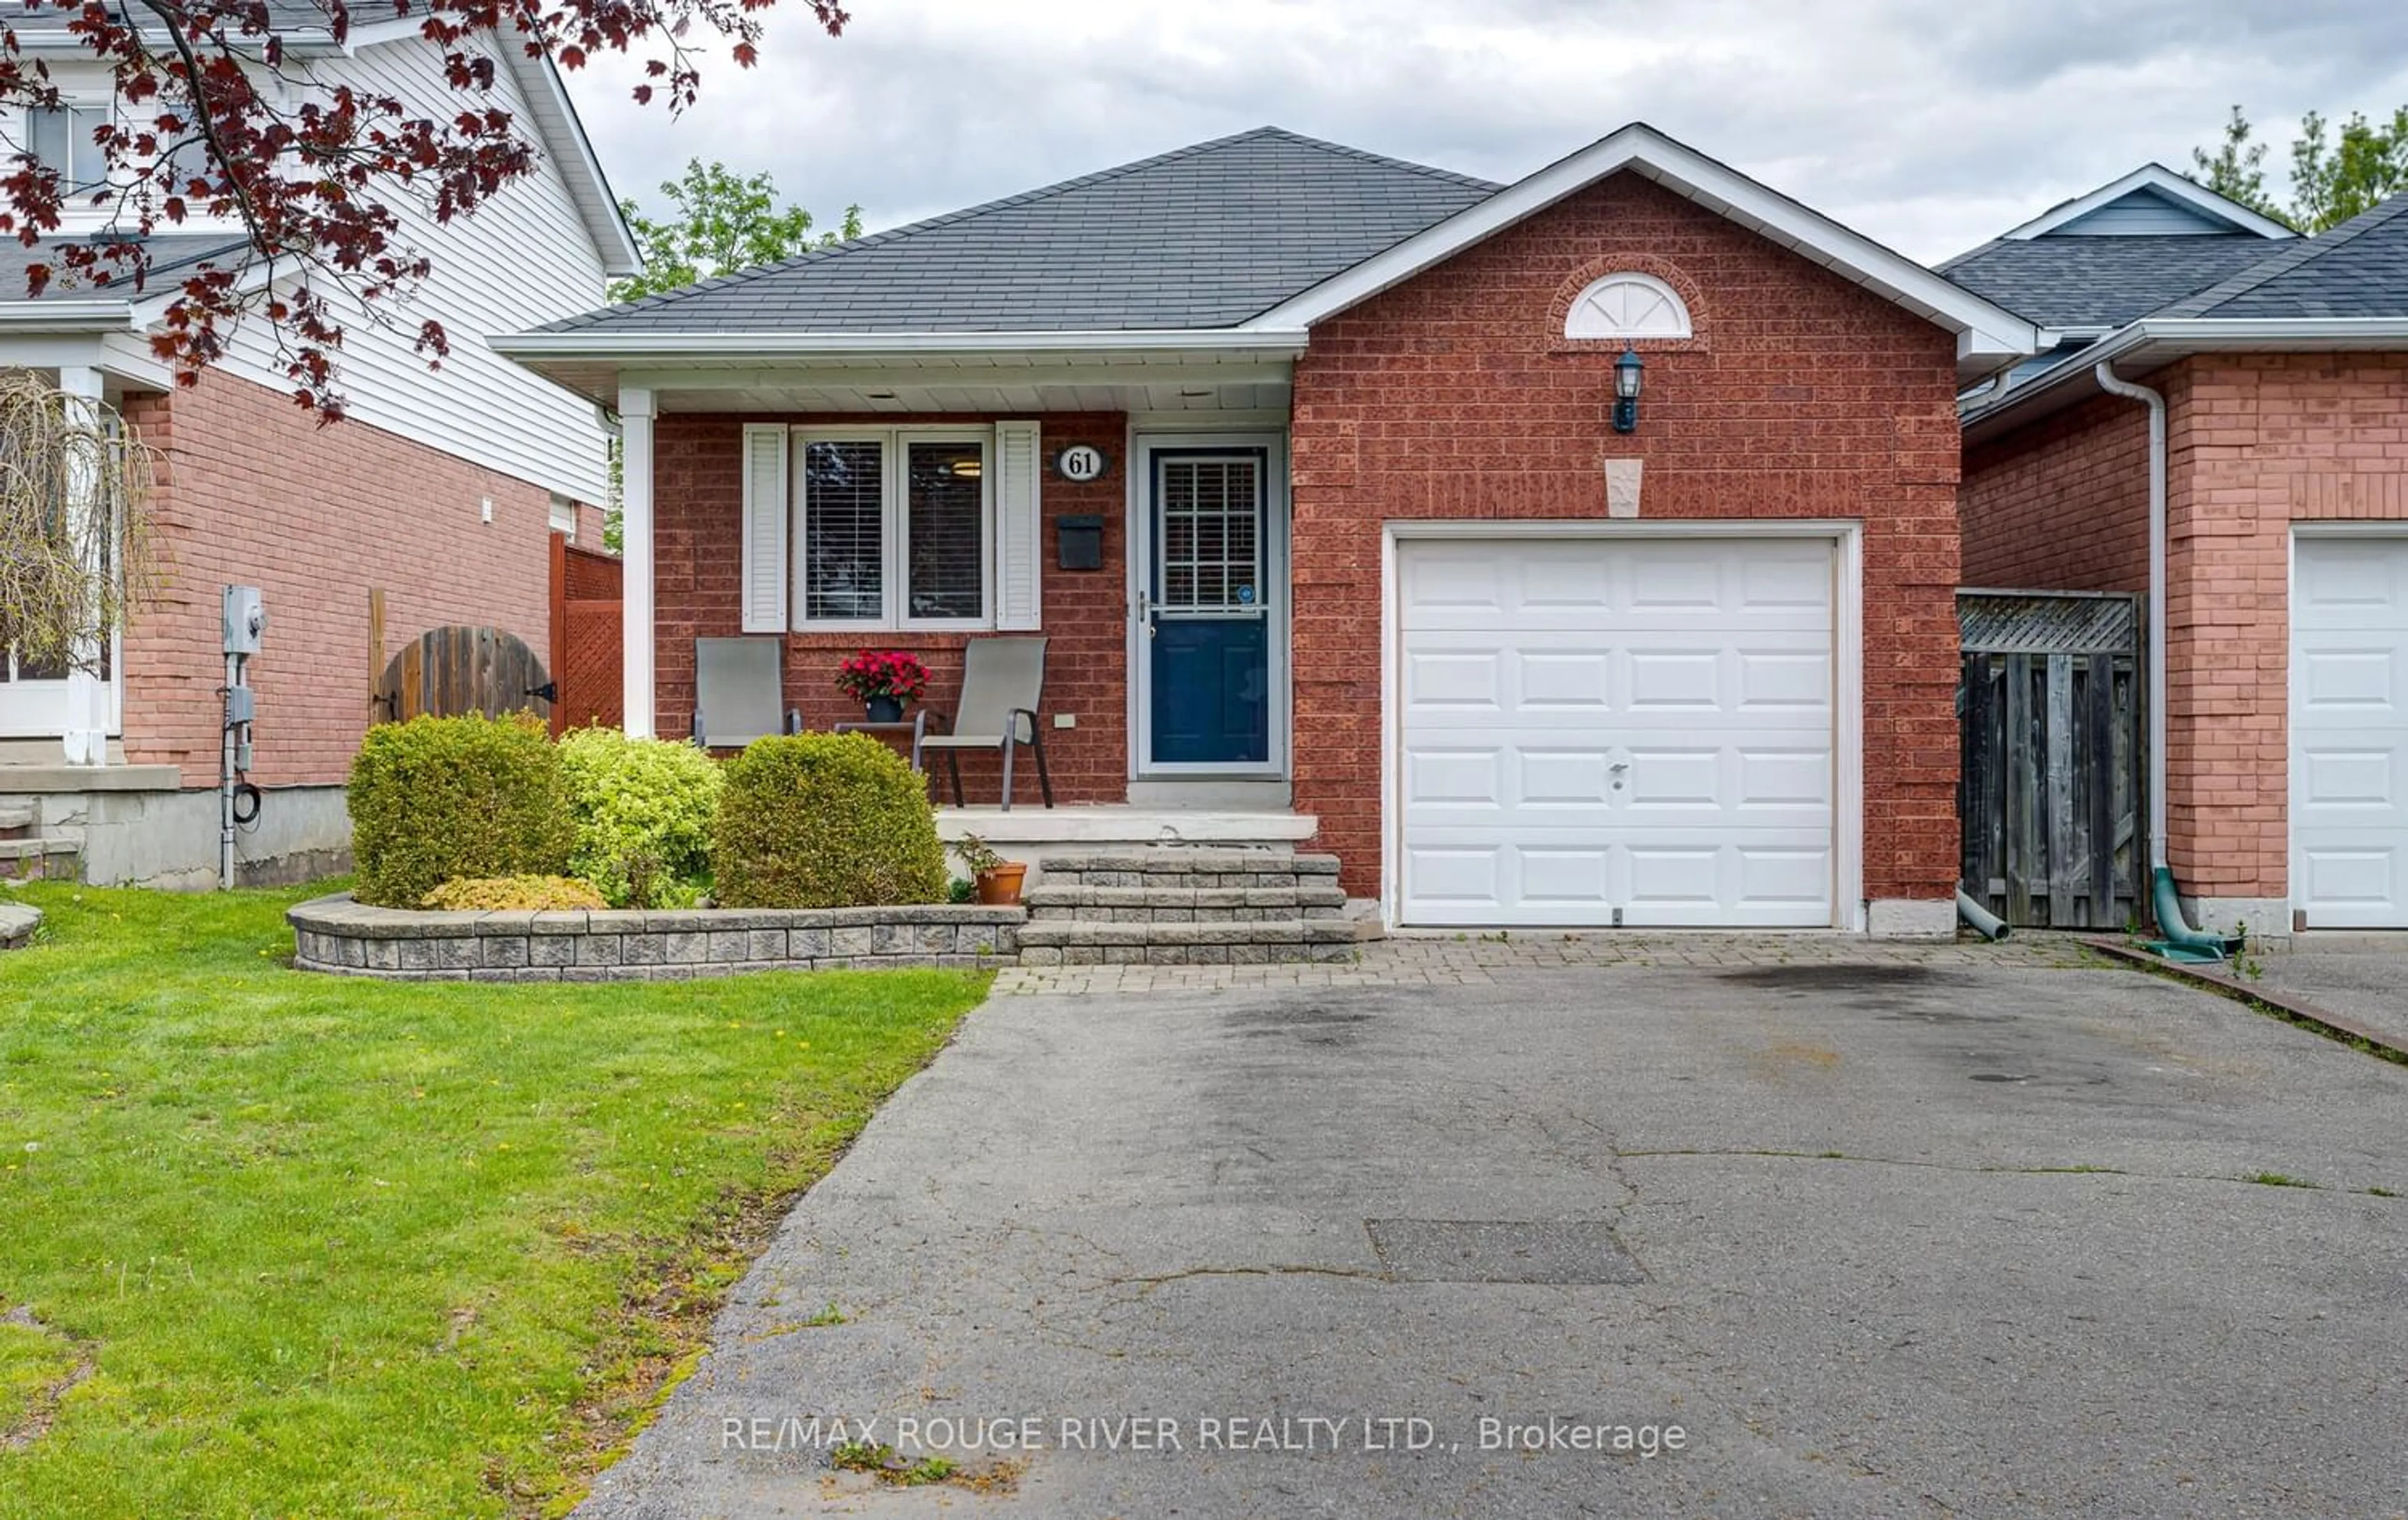 Home with brick exterior material for 61 Bushford St, Clarington Ontario L1E 2Y5